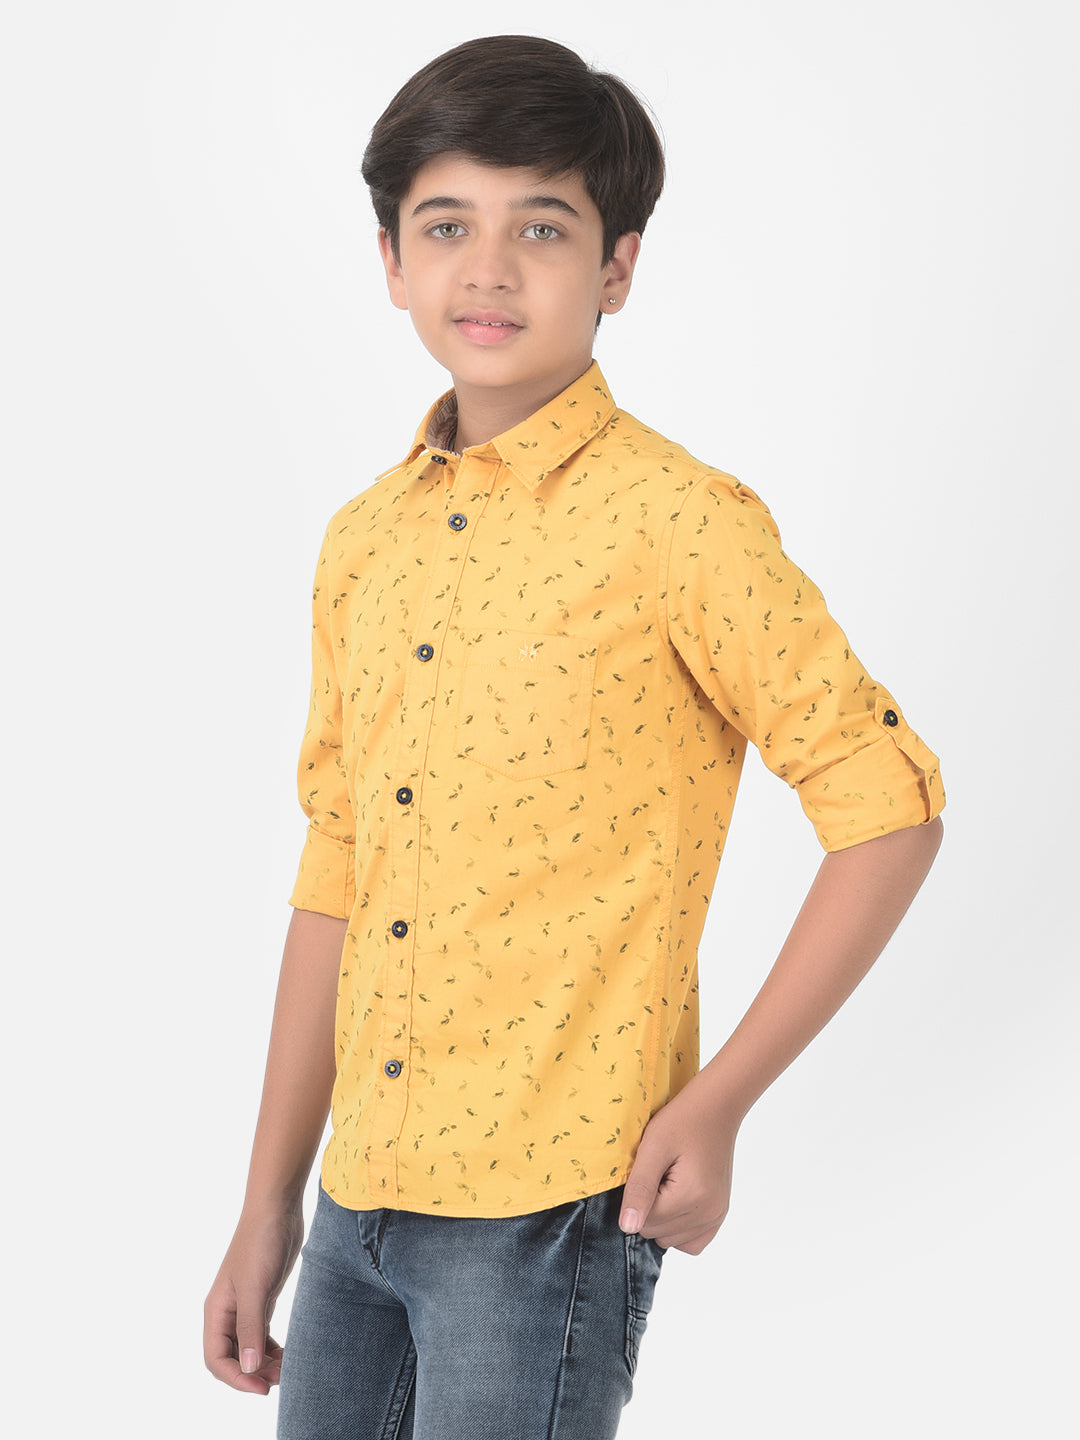 Yellow Floral Printed Shirt - Boys Shirts